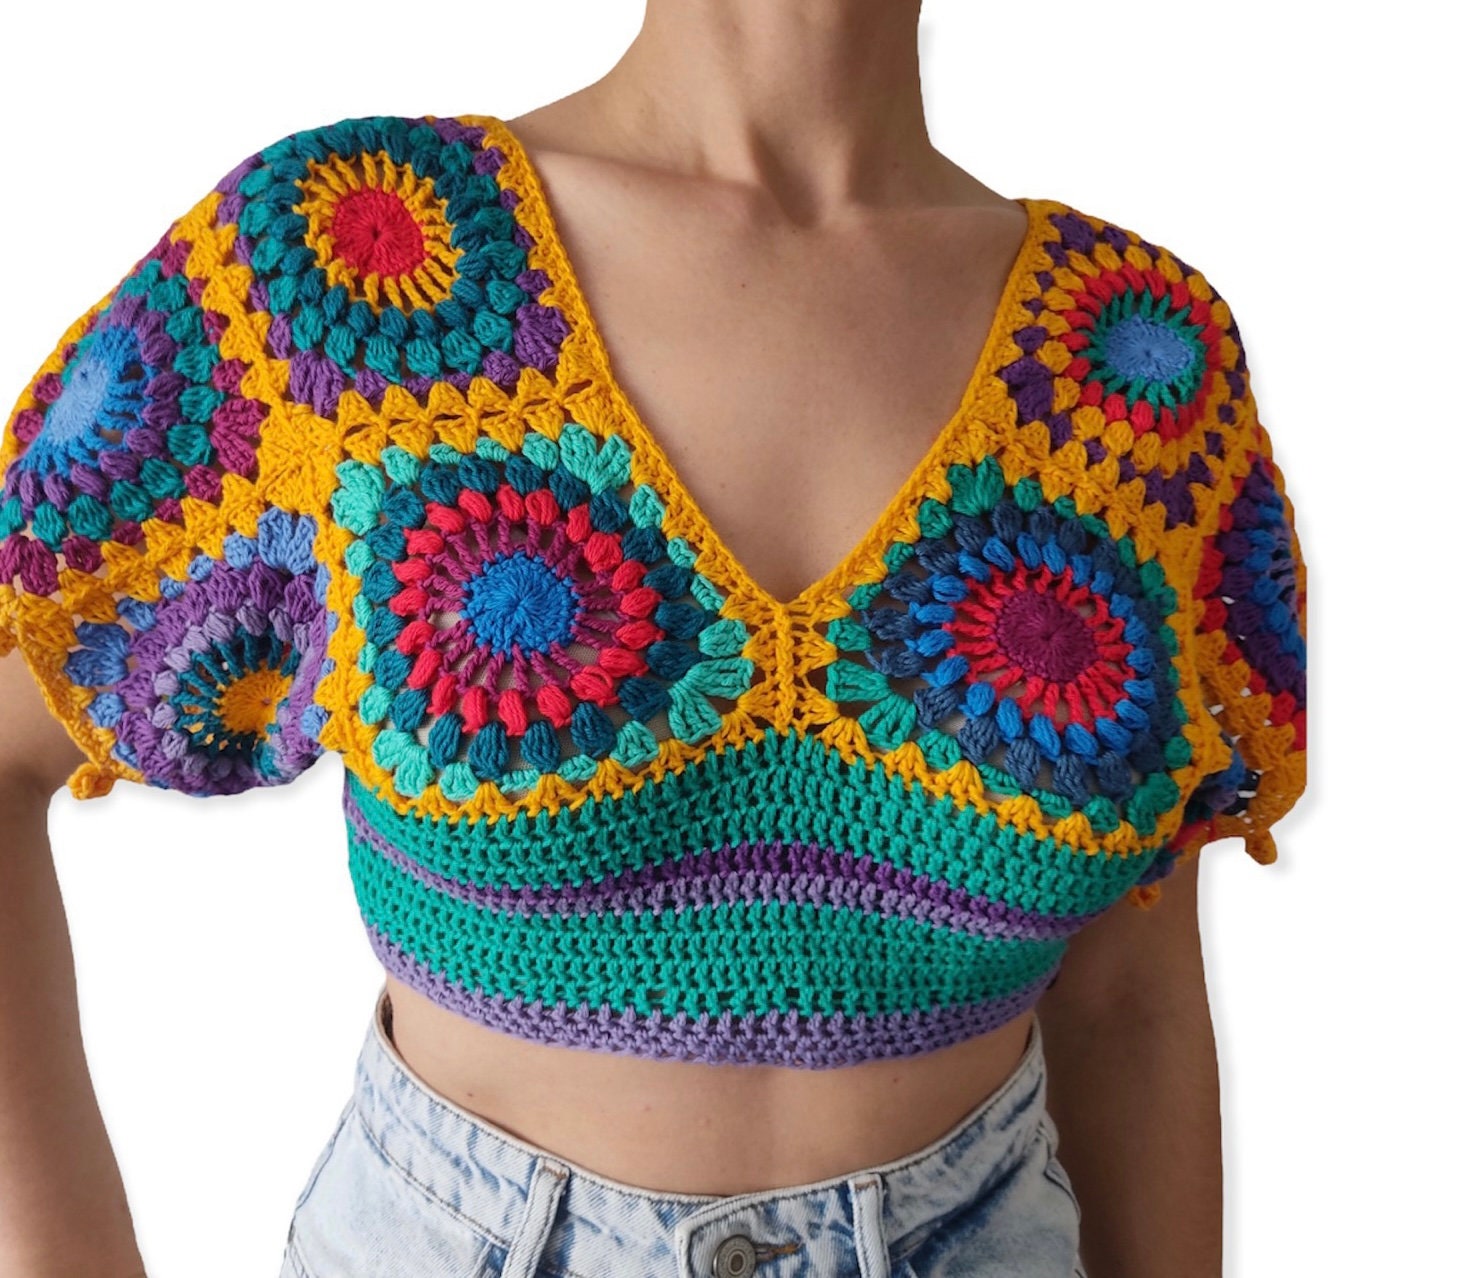 Handmade Crochet Top, Summer Crop Top, Granny Square Crop Top, Festival Top,  Boho Style, Vintage Style, Crochet Bralette, Beach Top 